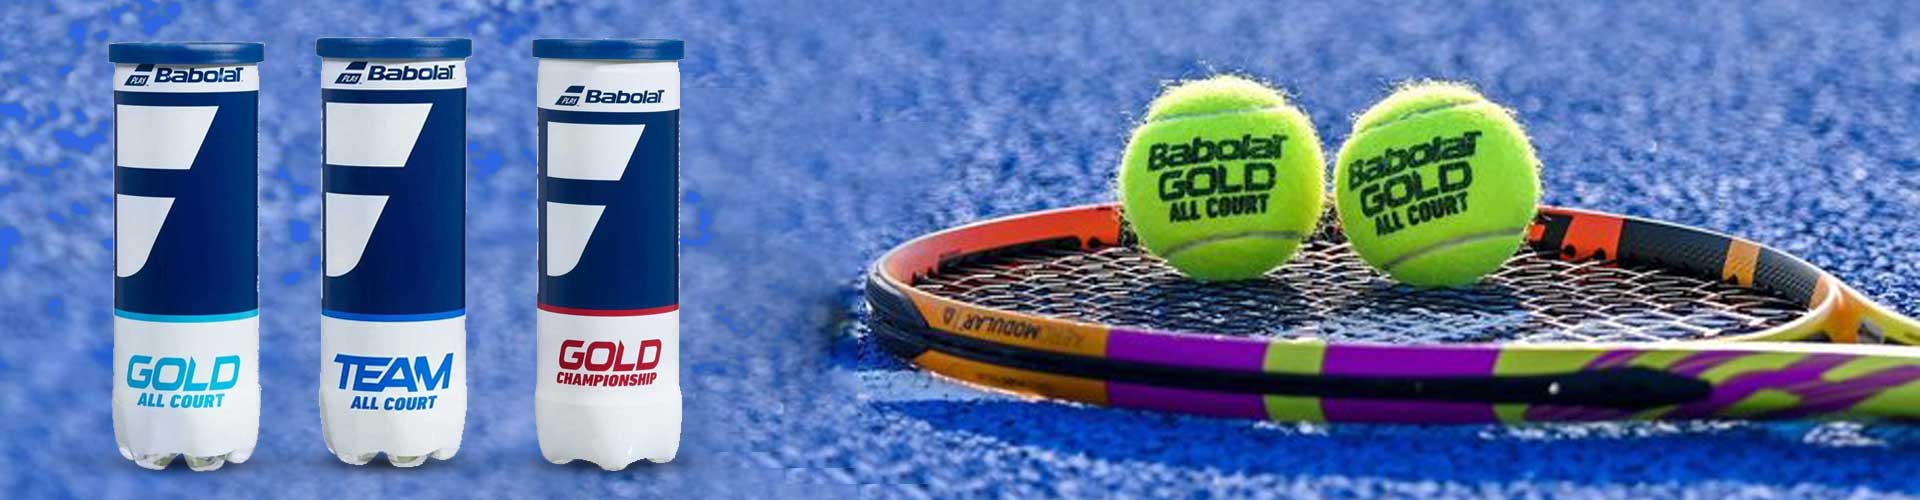 Case Tennis Balls Babolat Gold Championship All Court 